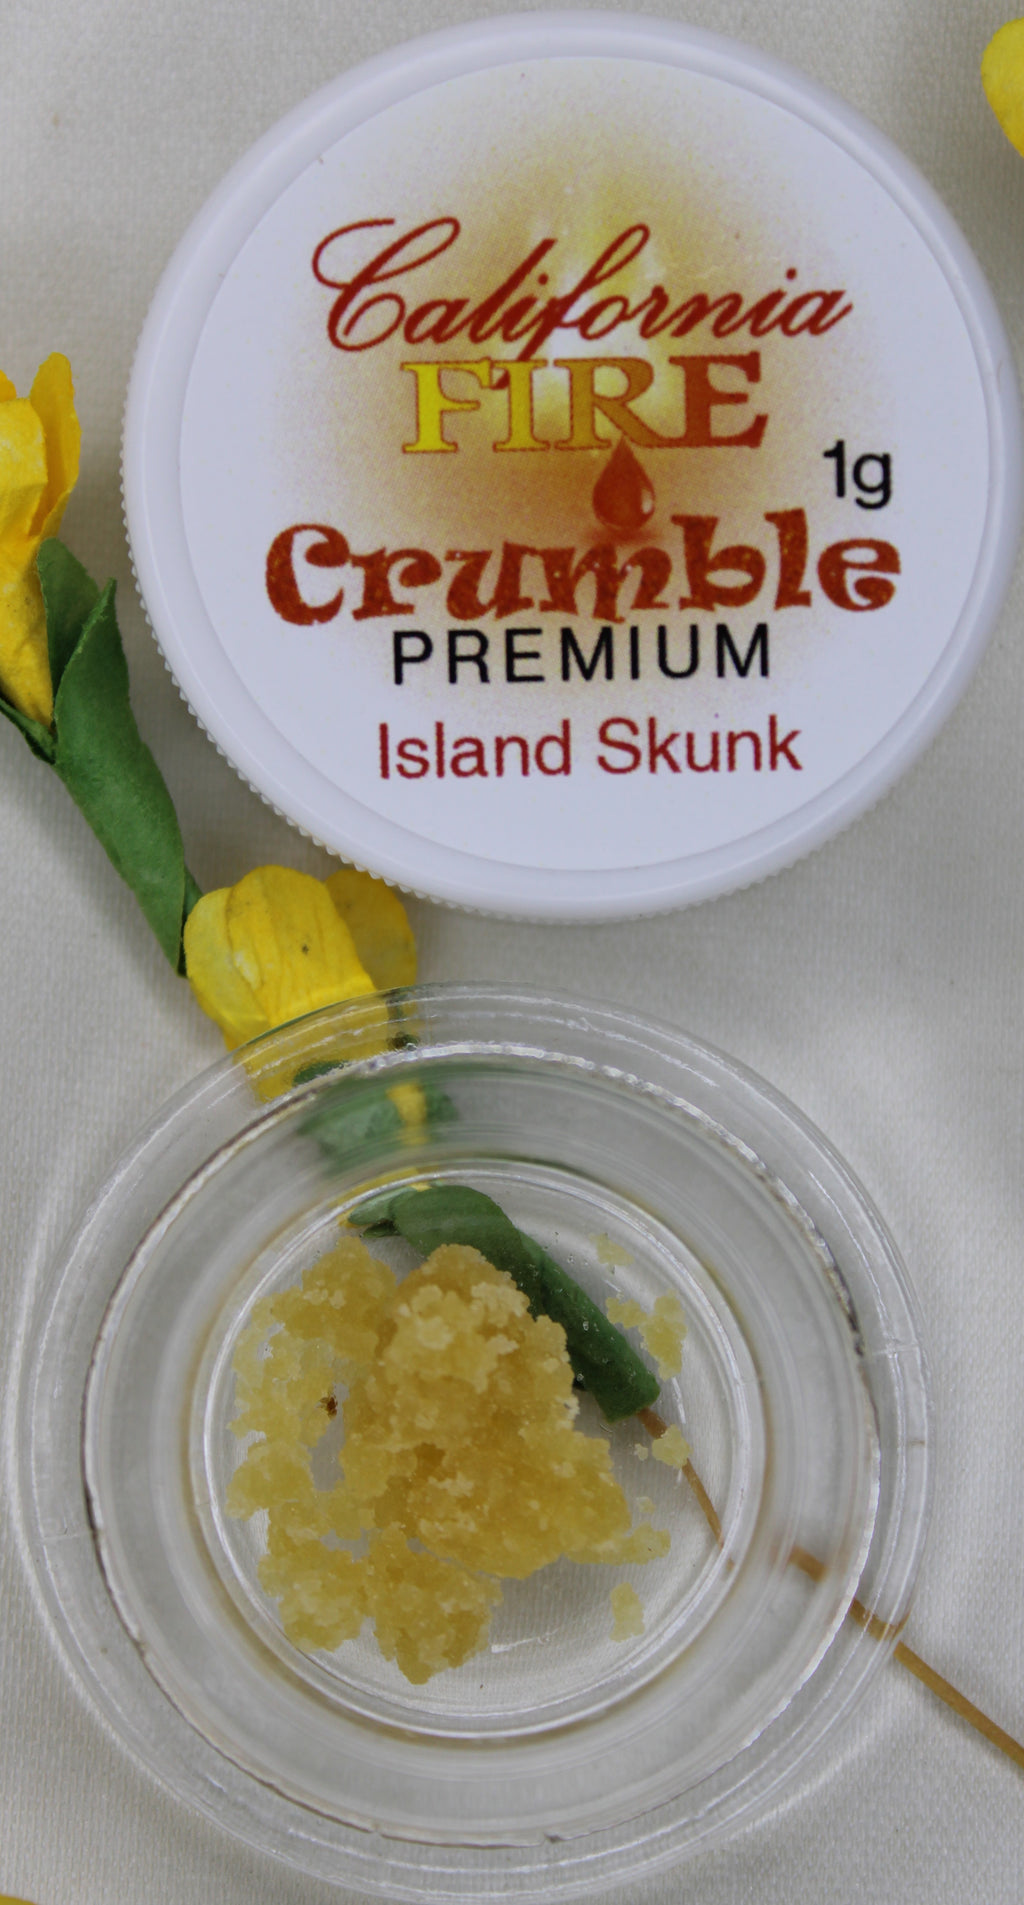 California Fire Premium Crumble "Island Skunk" (1g)